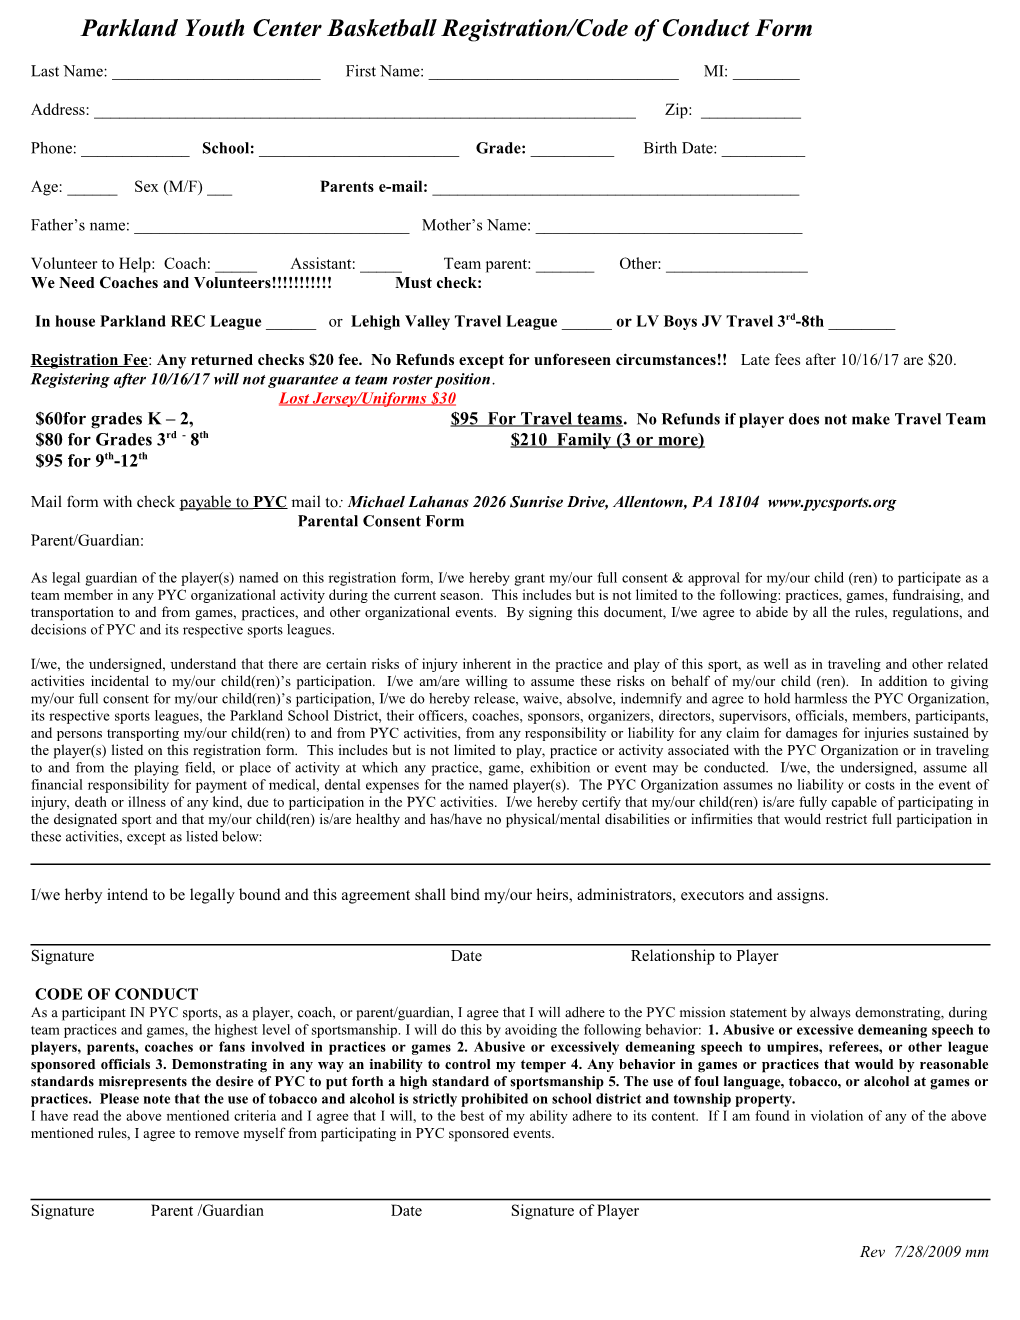 Parkland Youth Center Basketball Registration Form